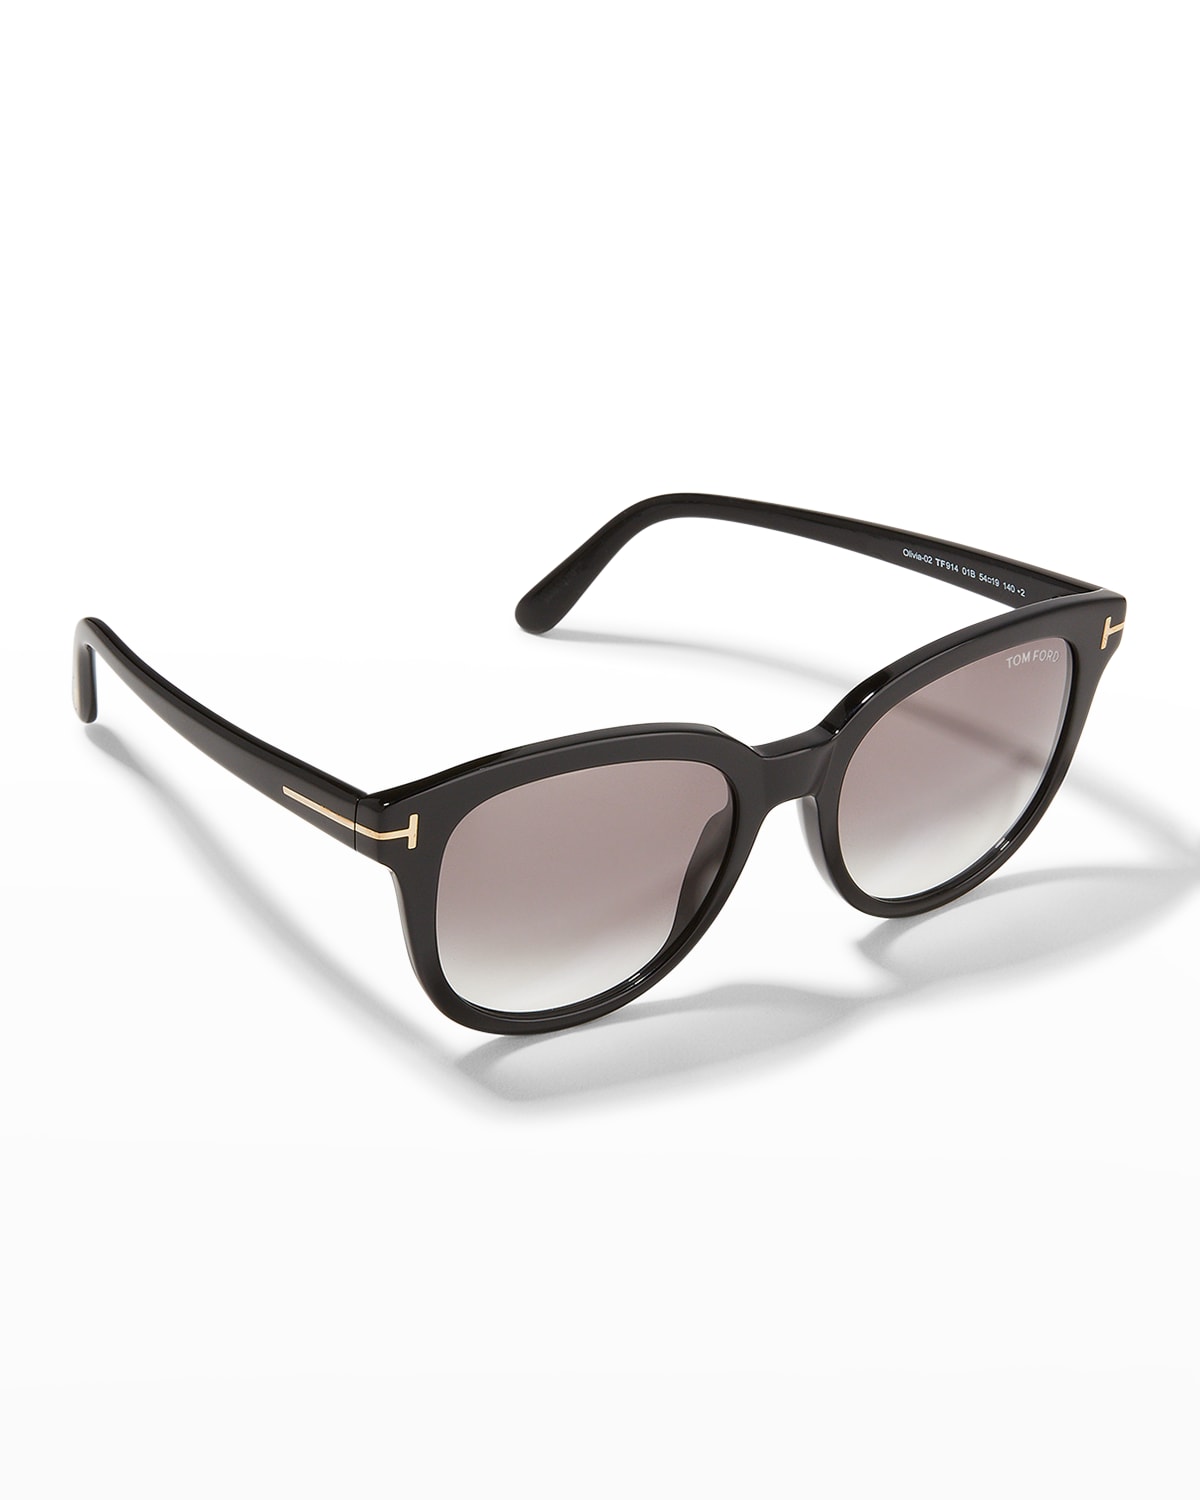 SF3871 Unisex Classic Black Sunglasses Stylish Tinted Transparent Gradient Lens 